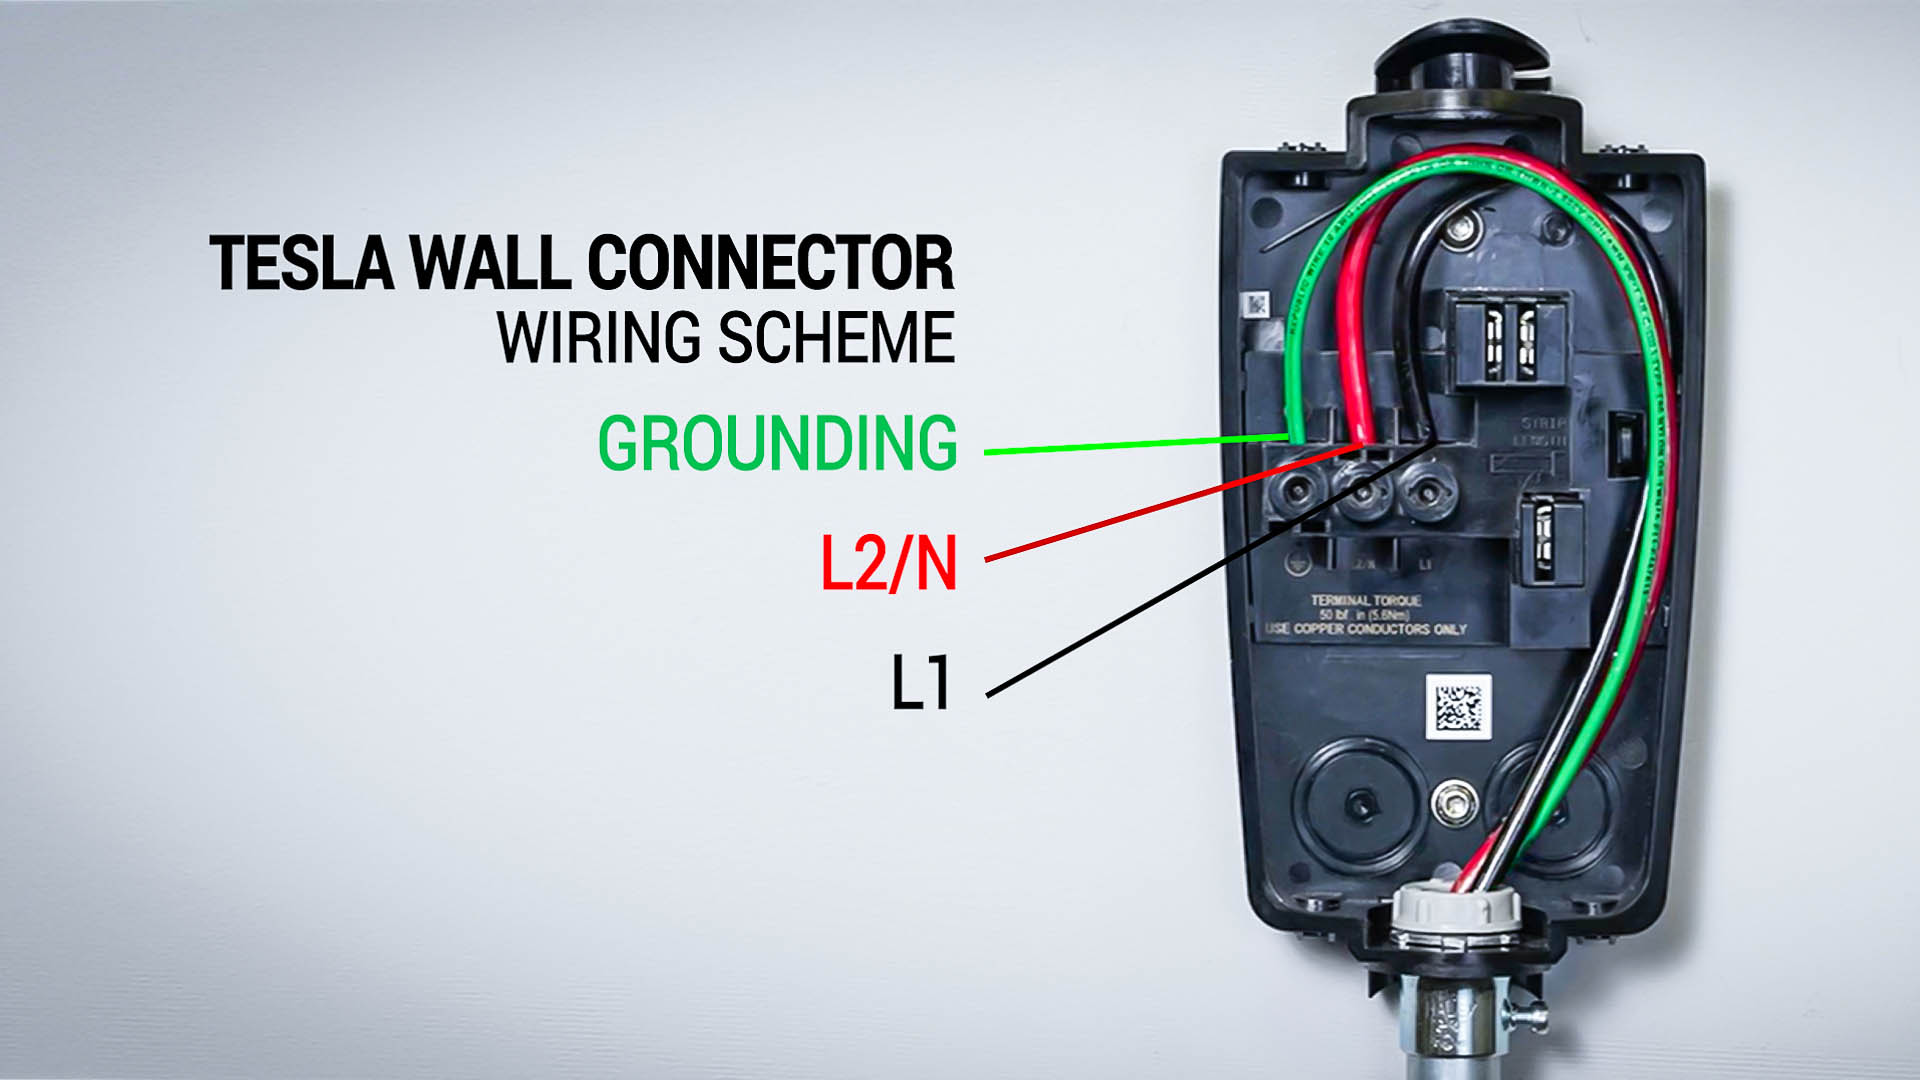 https://interchargers.com/wp-content/uploads/2020/12/tesla-wall-connector-wiring-scheme.jpg